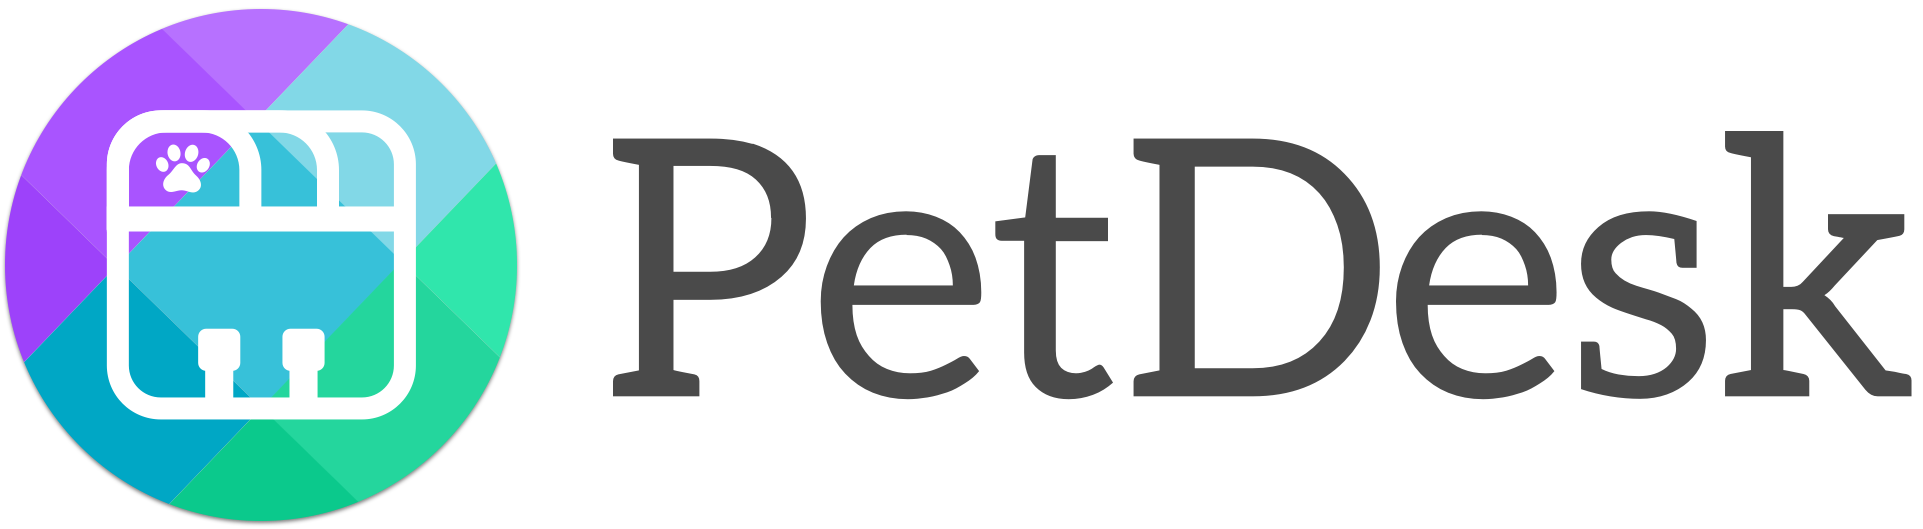 PetDesk-Logo-large-.png